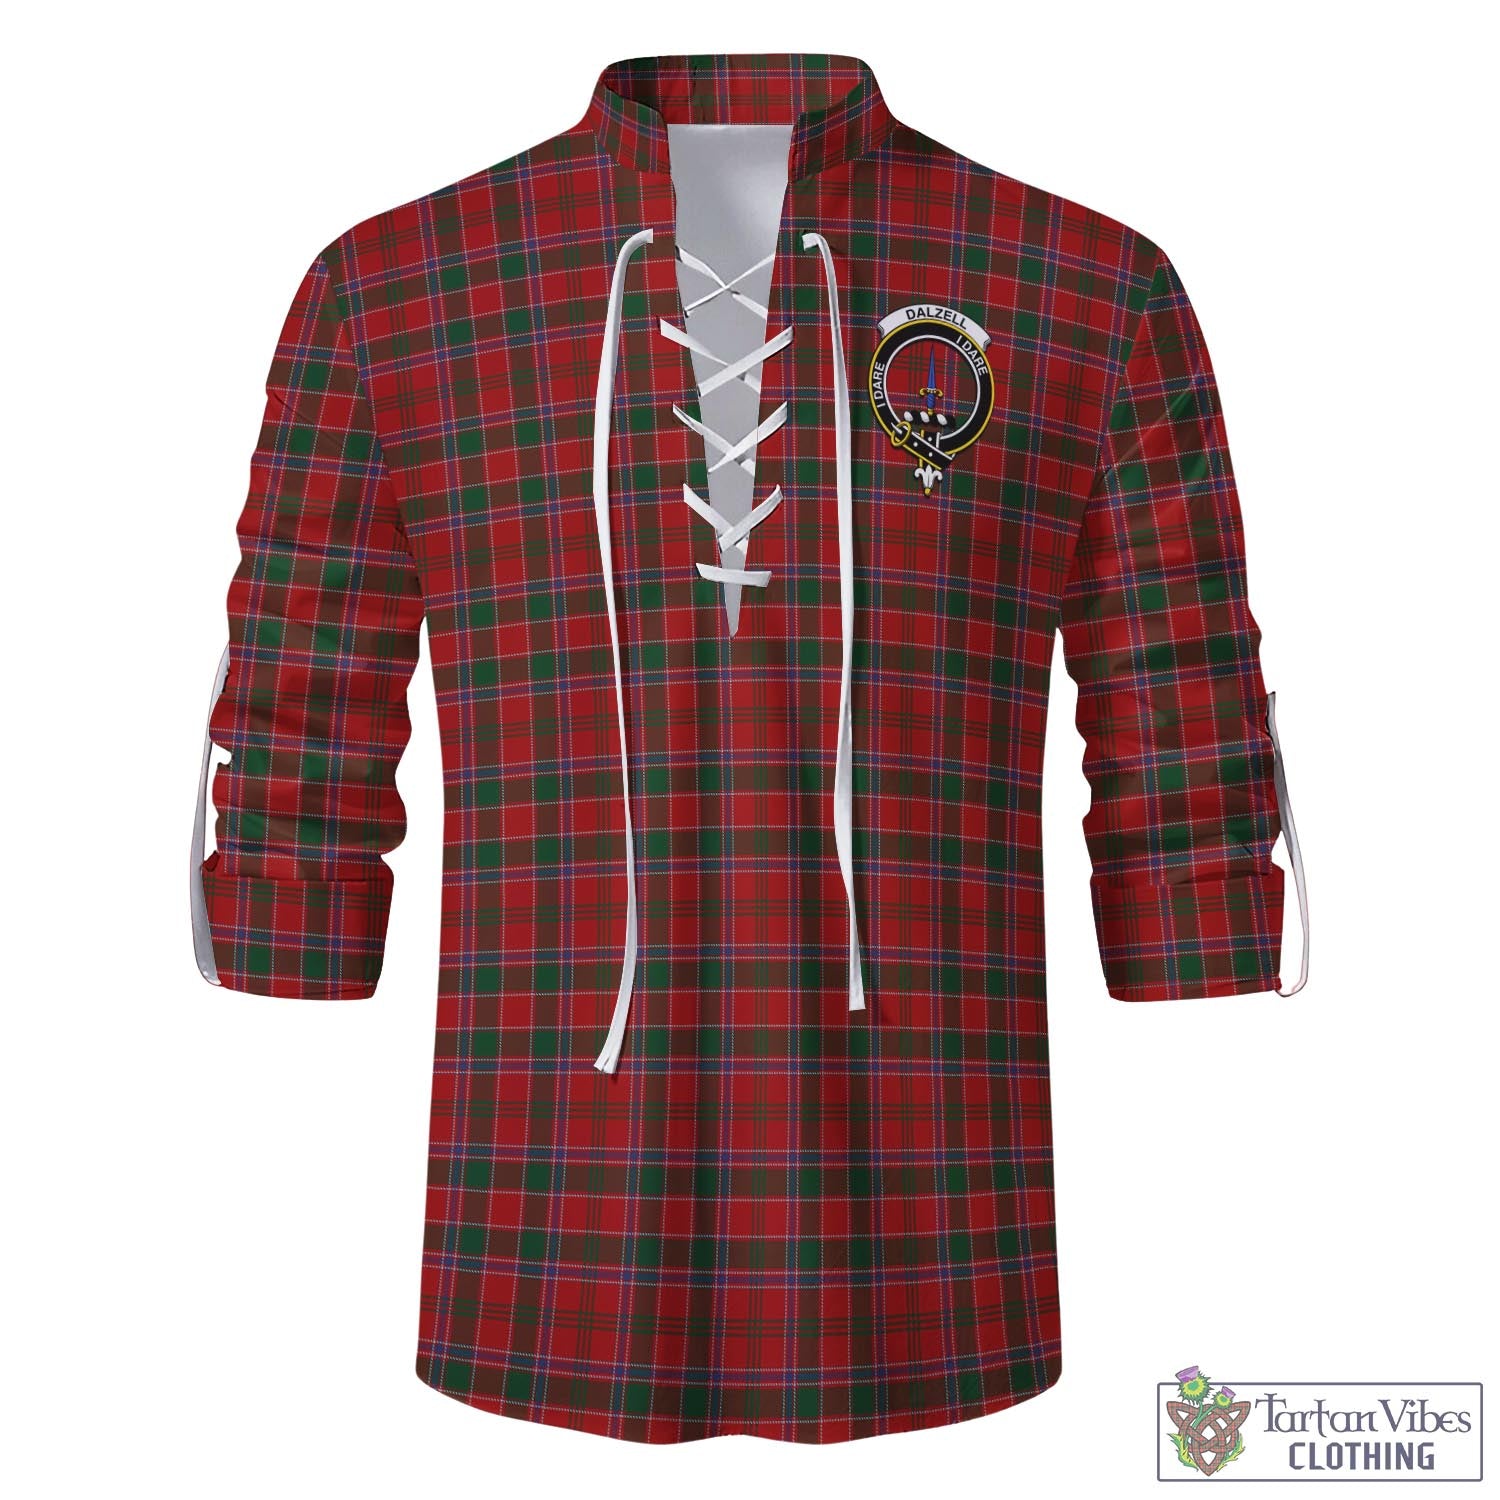 Tartan Vibes Clothing Dalzell (Dalziel) Tartan Men's Scottish Traditional Jacobite Ghillie Kilt Shirt with Family Crest